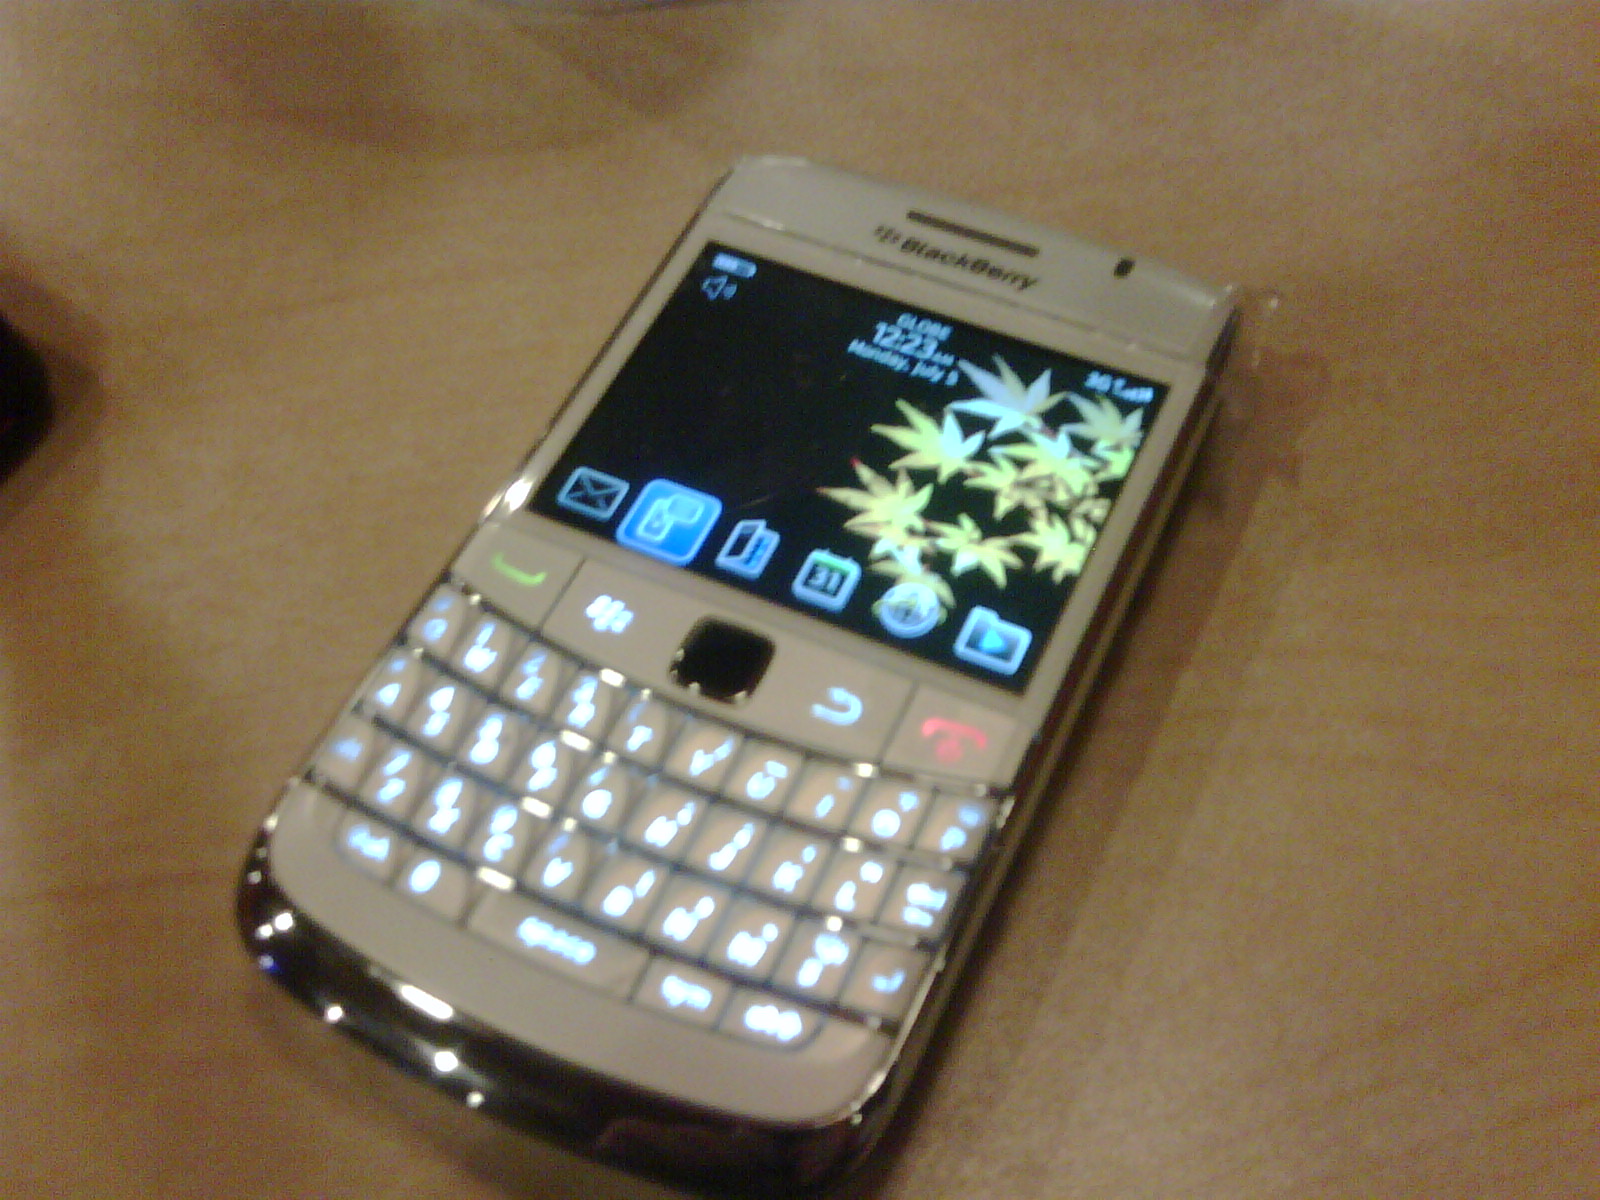 is a Blackberry Bold 9700